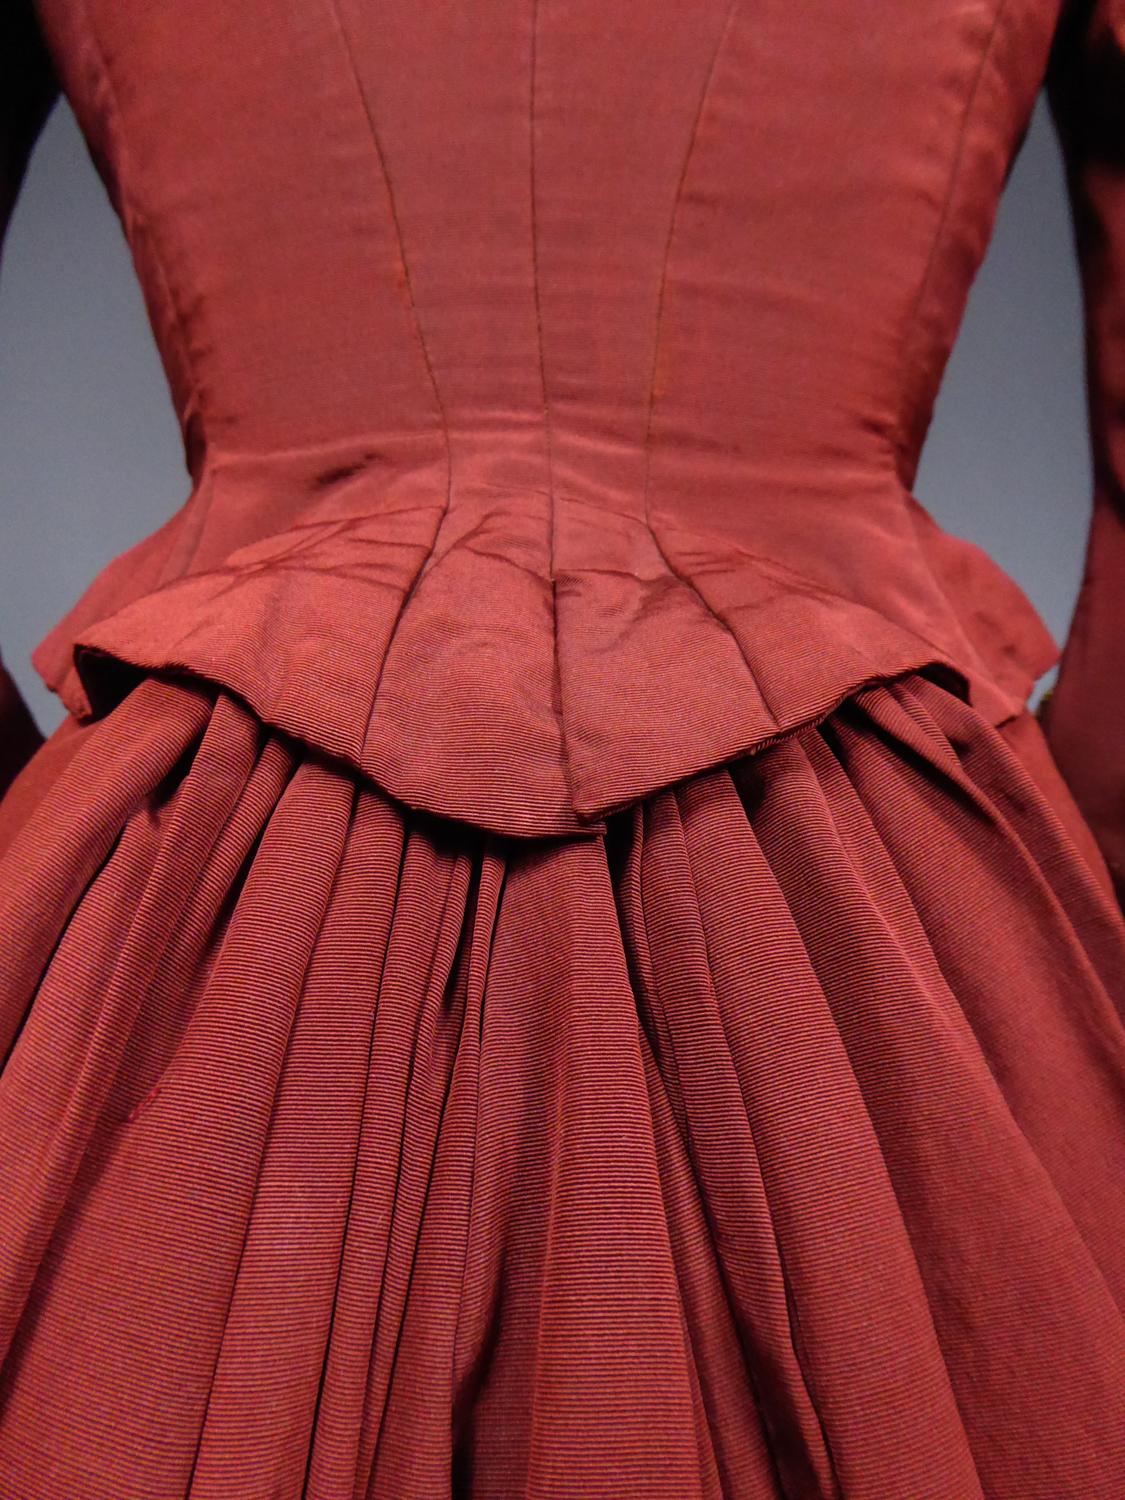 A Edwardian Faille Silk Amazon Bodice and Skirt Set  - England late 19th century 11